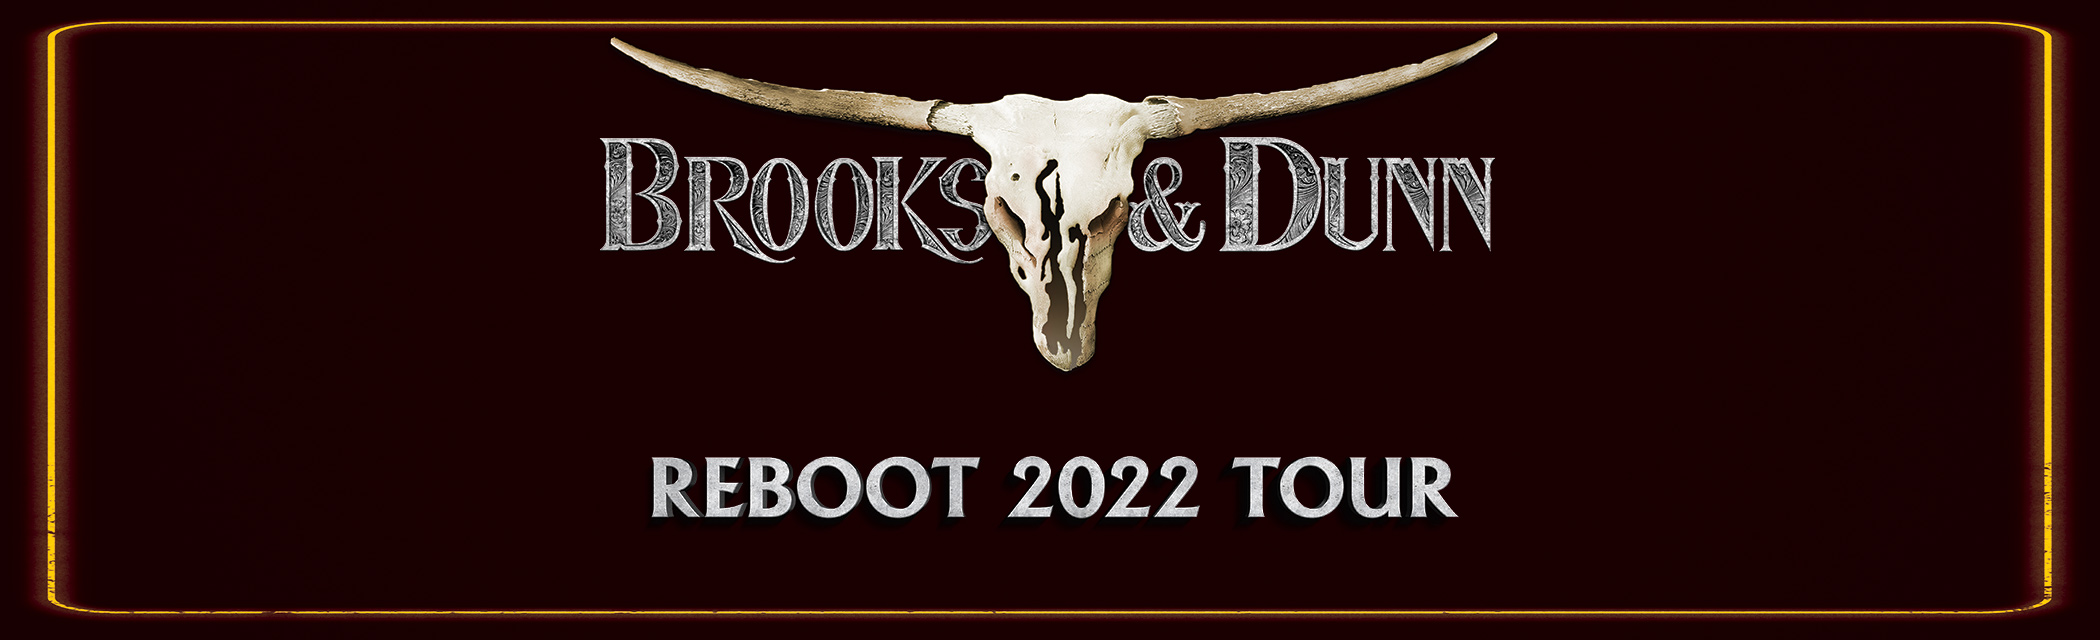 Reboot 2022 Tour